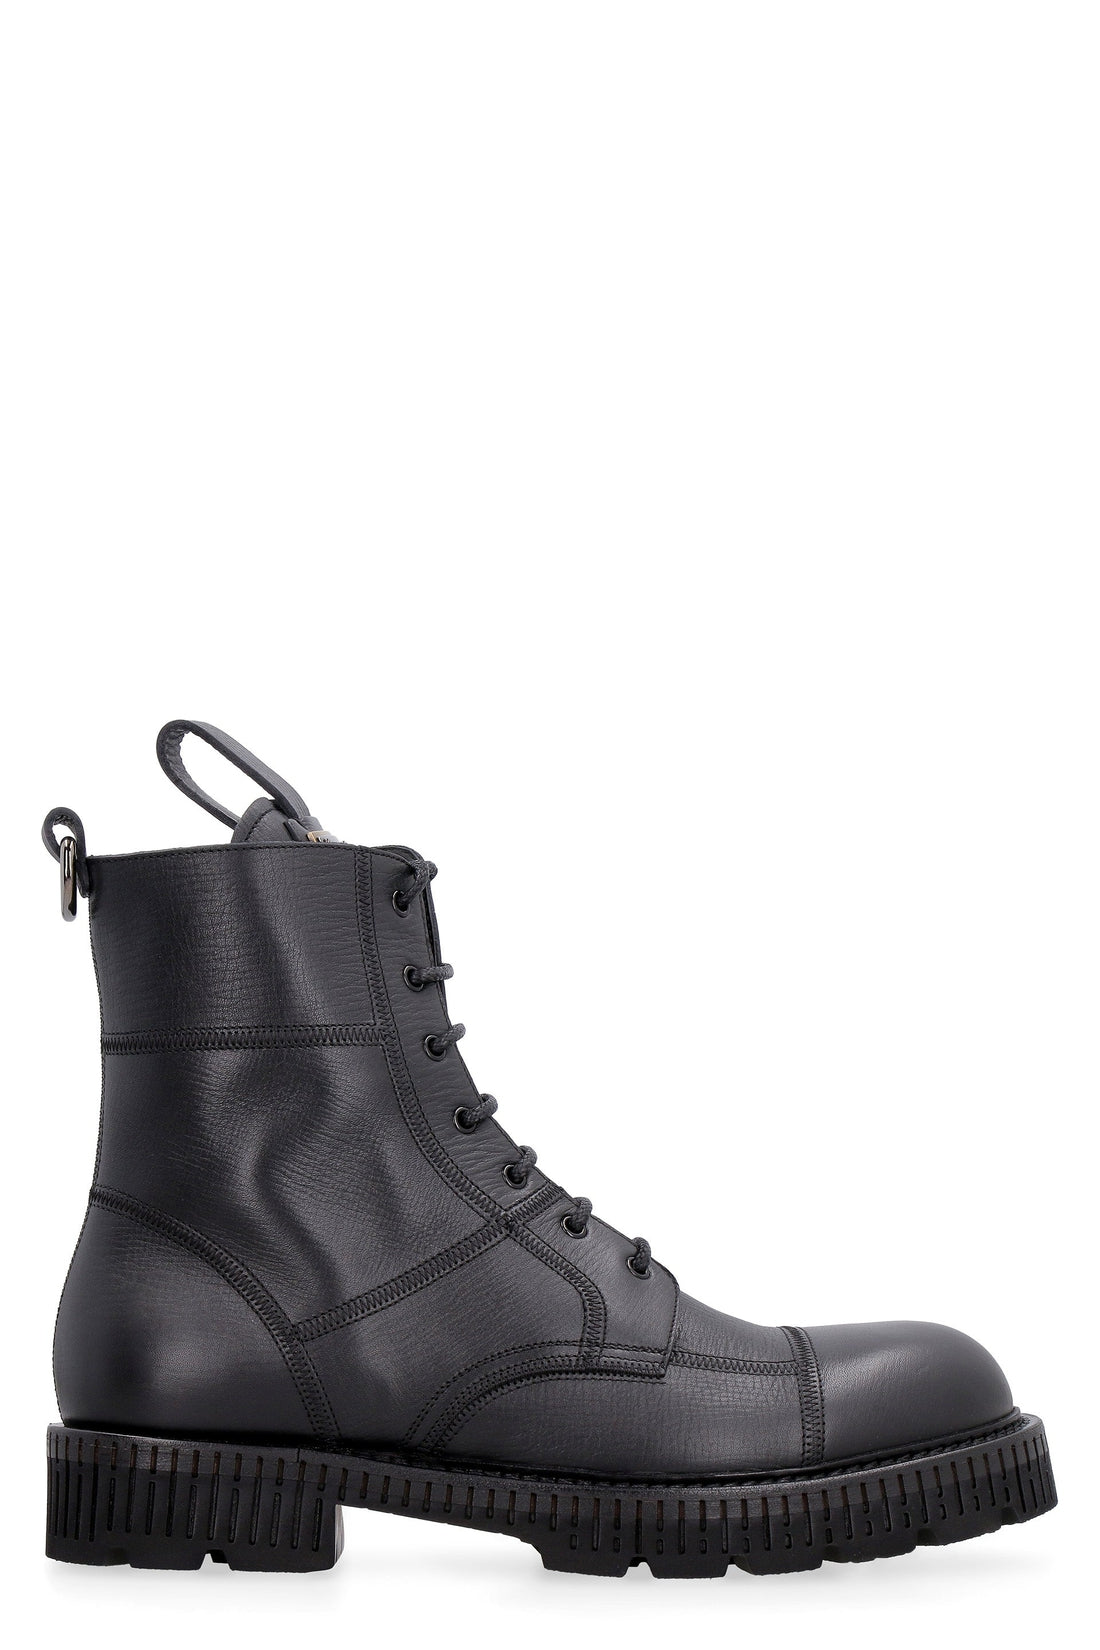 Dolce & Gabbana-OUTLET-SALE-Leather combat boots-ARCHIVIST